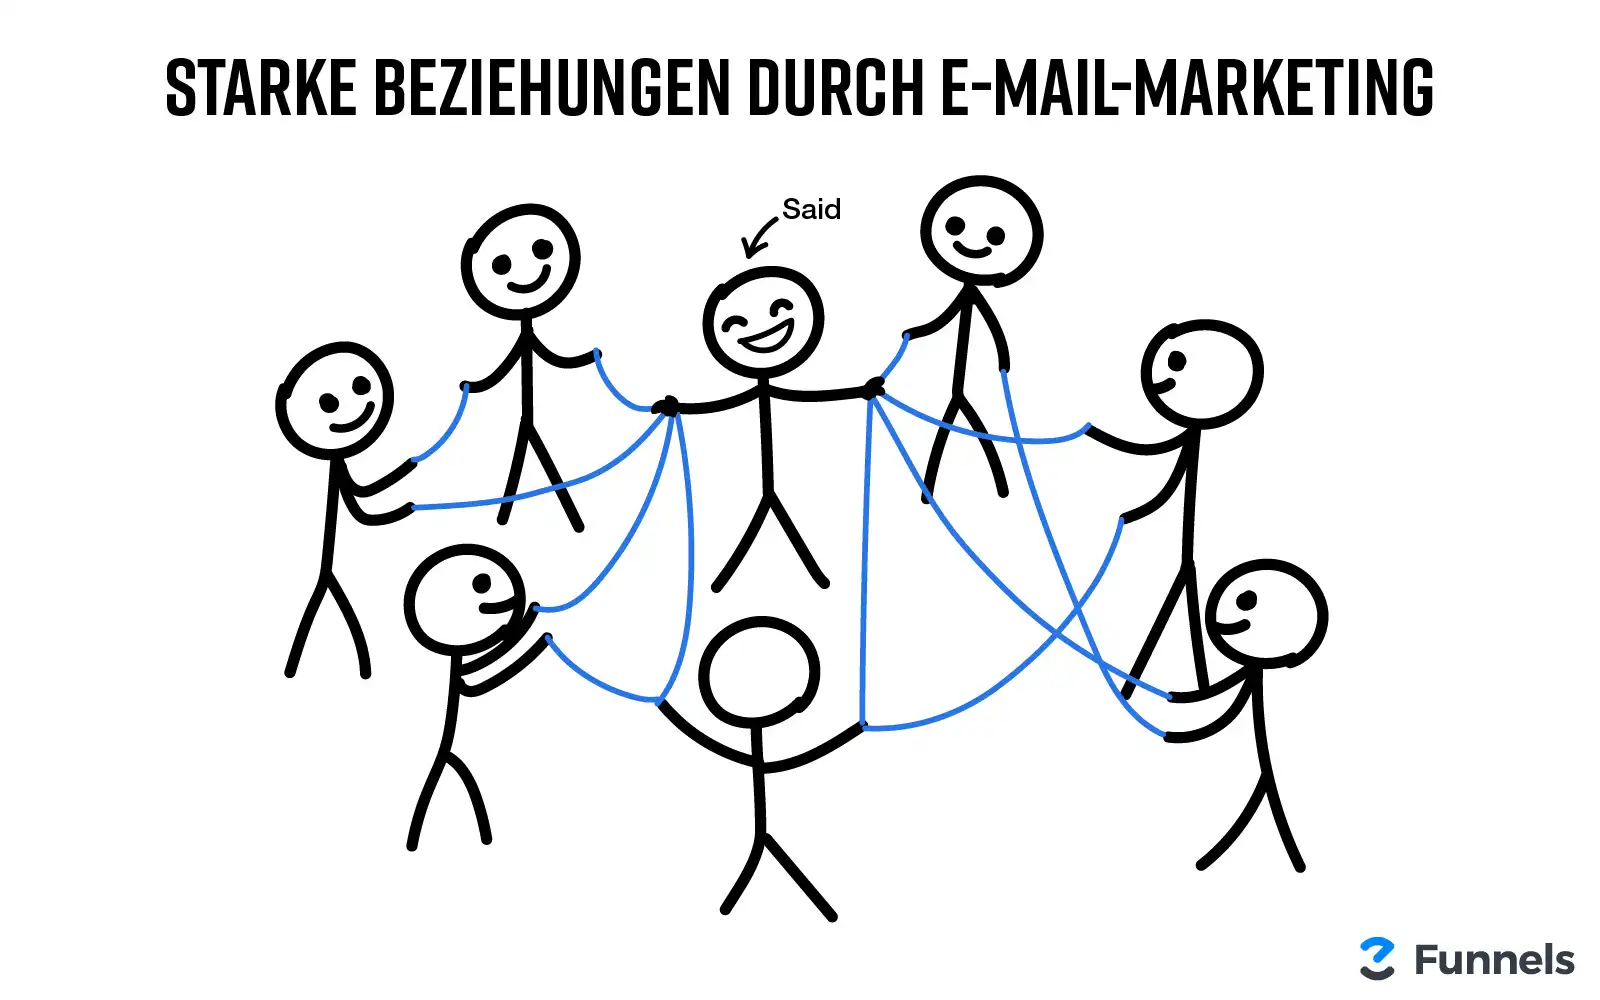 Kundenbeziehung stärken durch E-Mail-Marketing